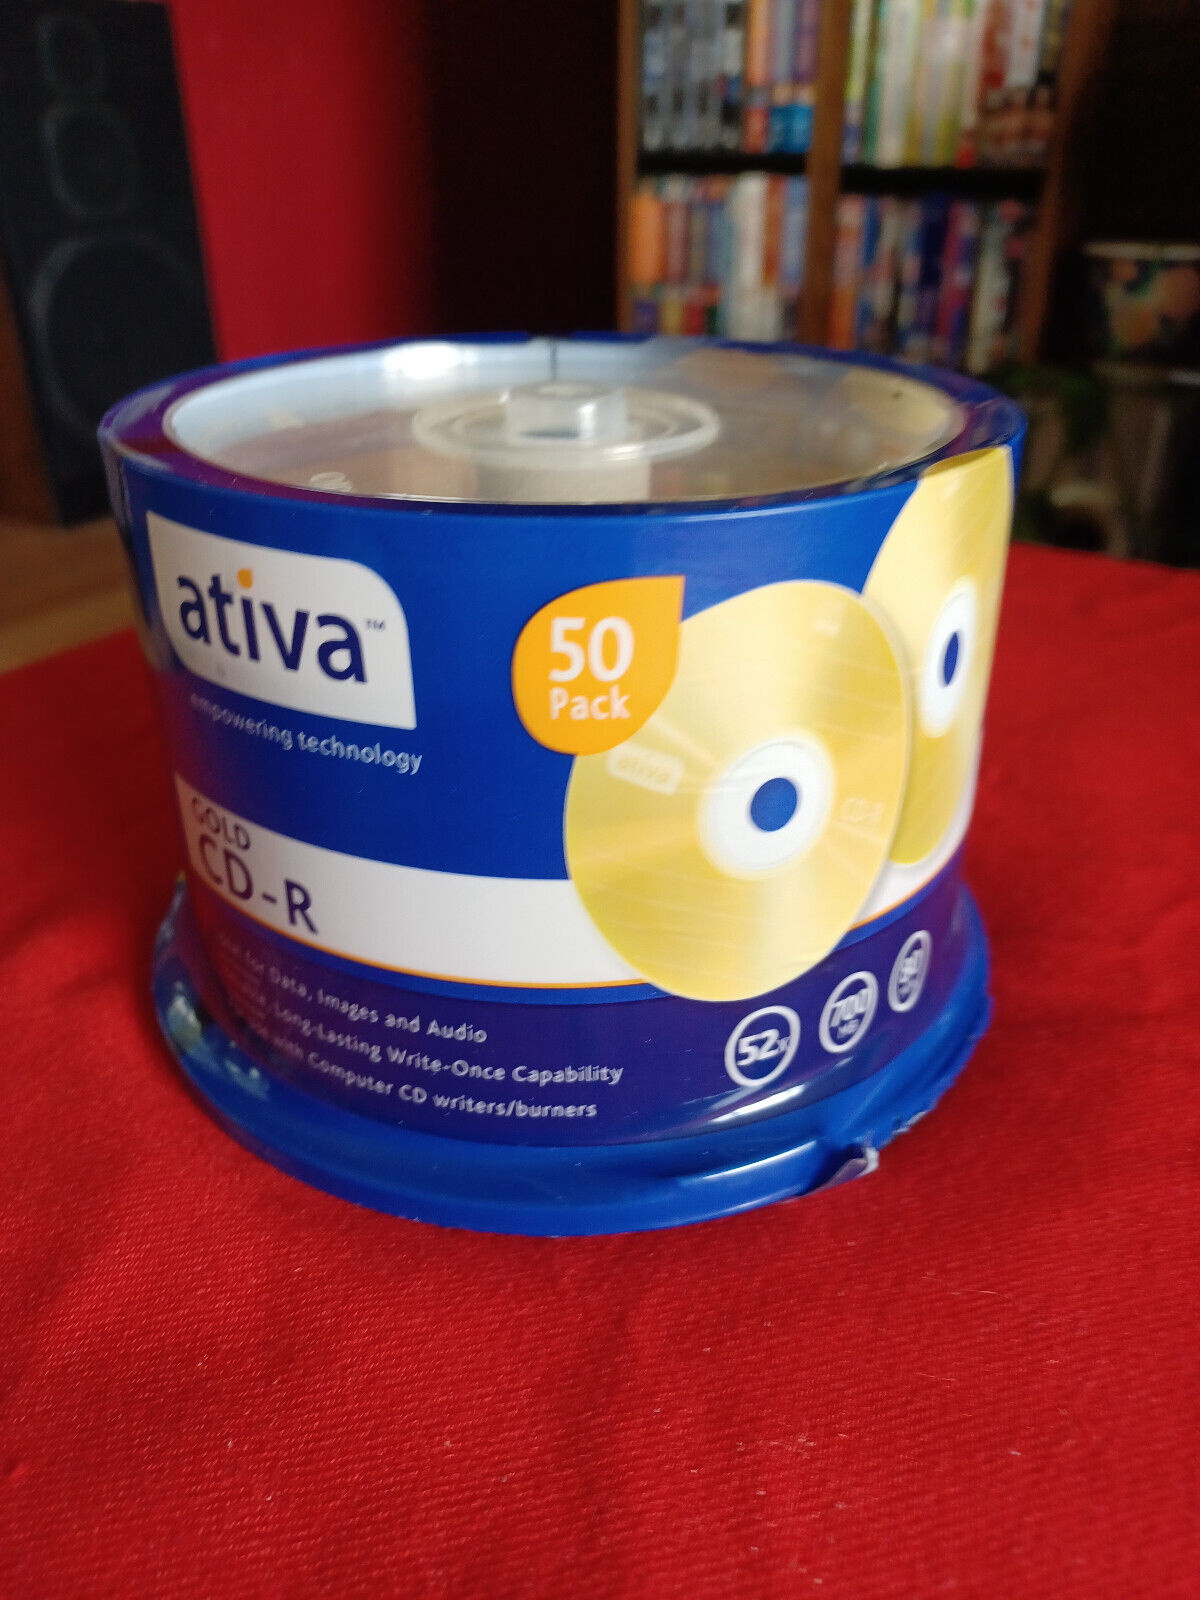 Ativa 50 Pack CD-R CDs - Sealed